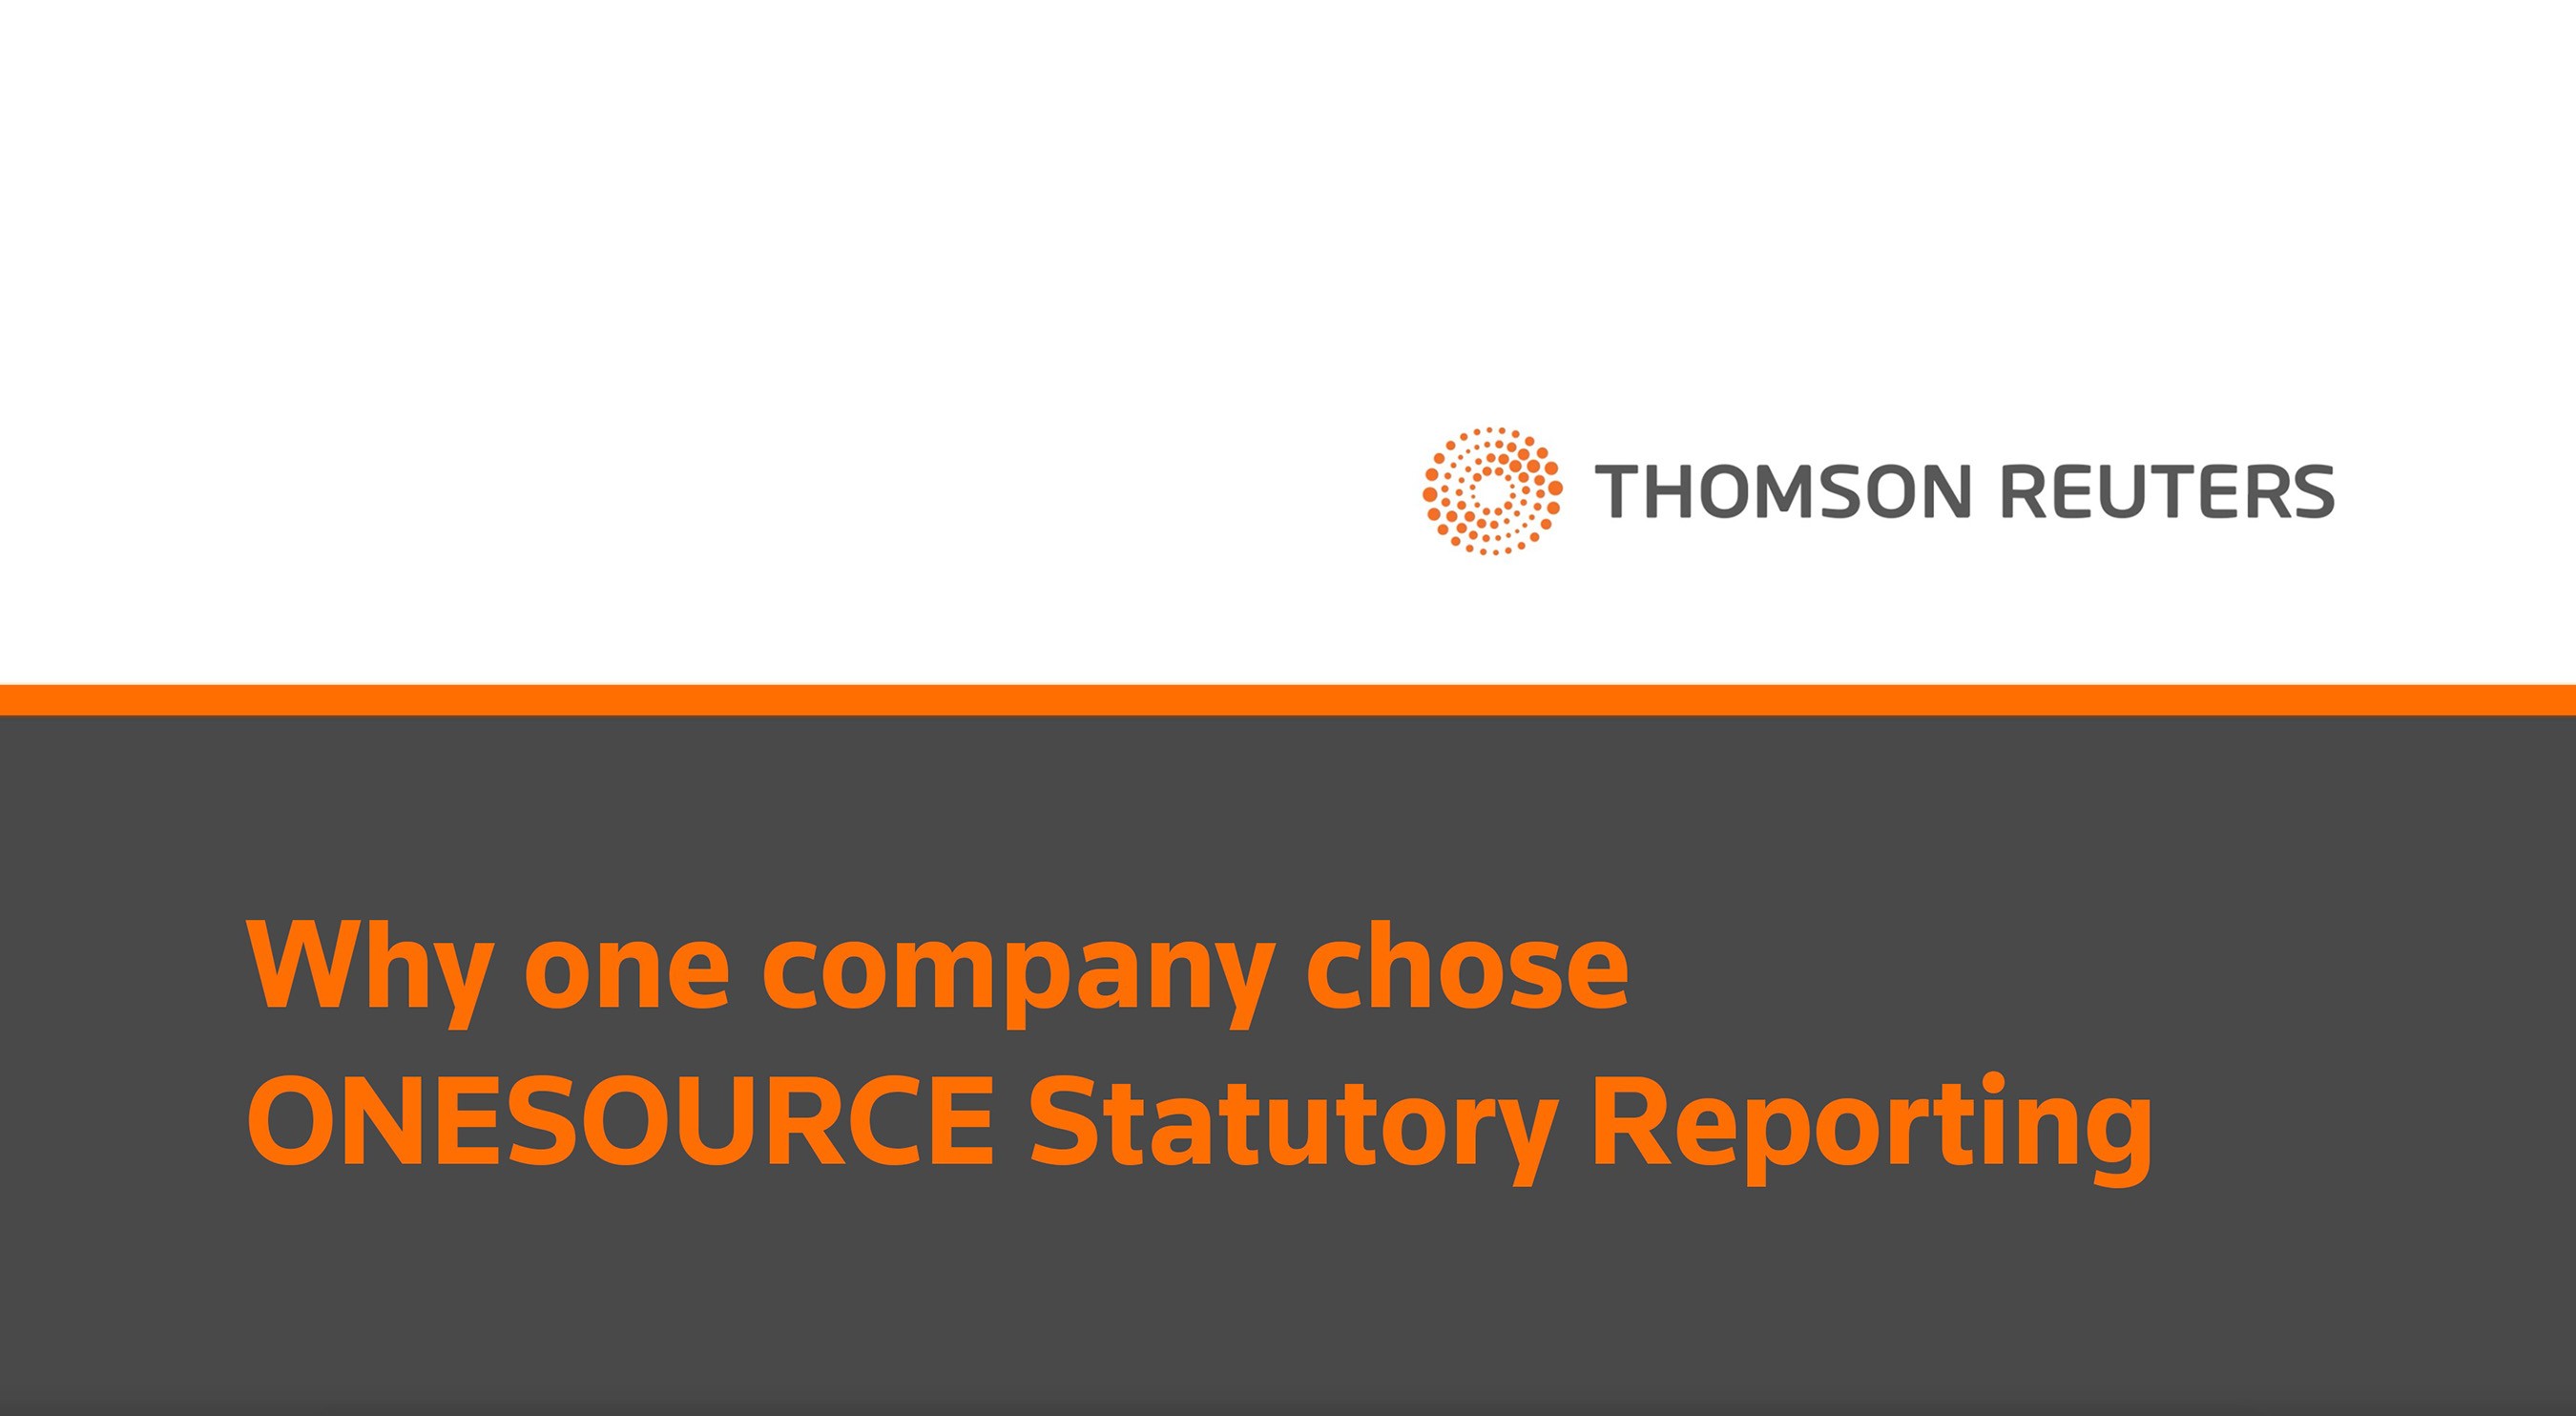 Why choose ONESOURCE Statutory Reporting